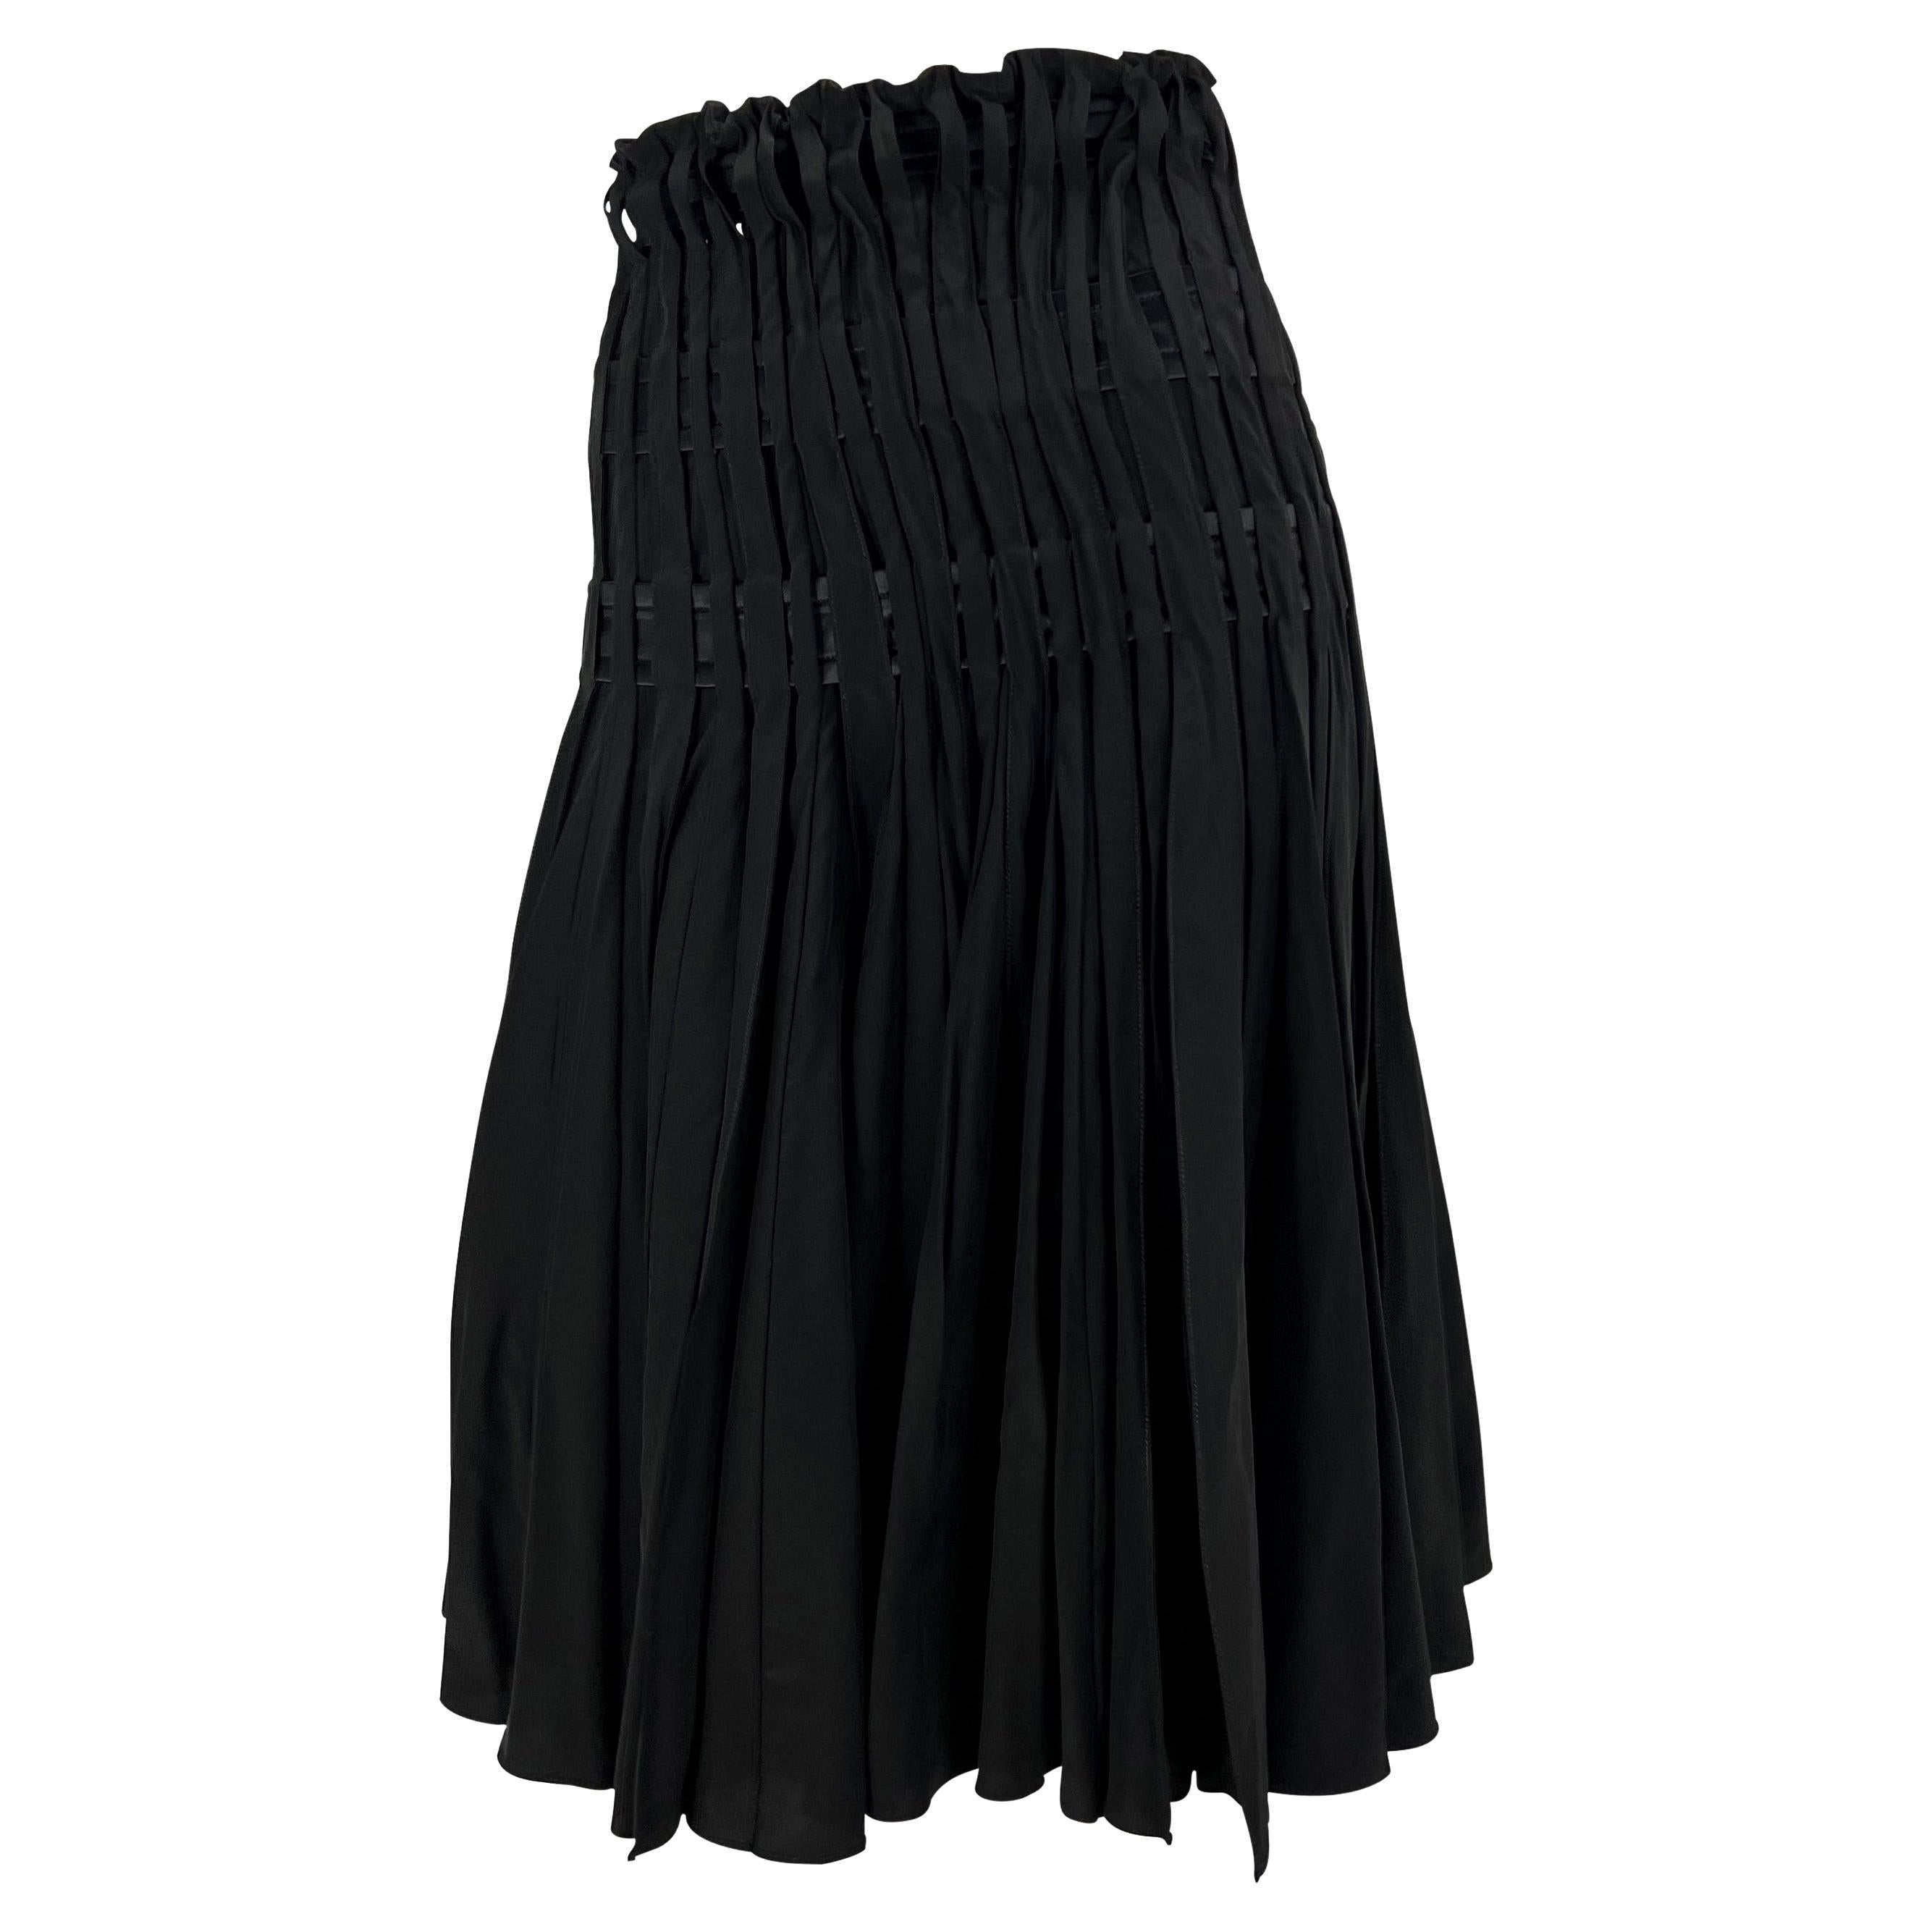 2000s maxi skirt